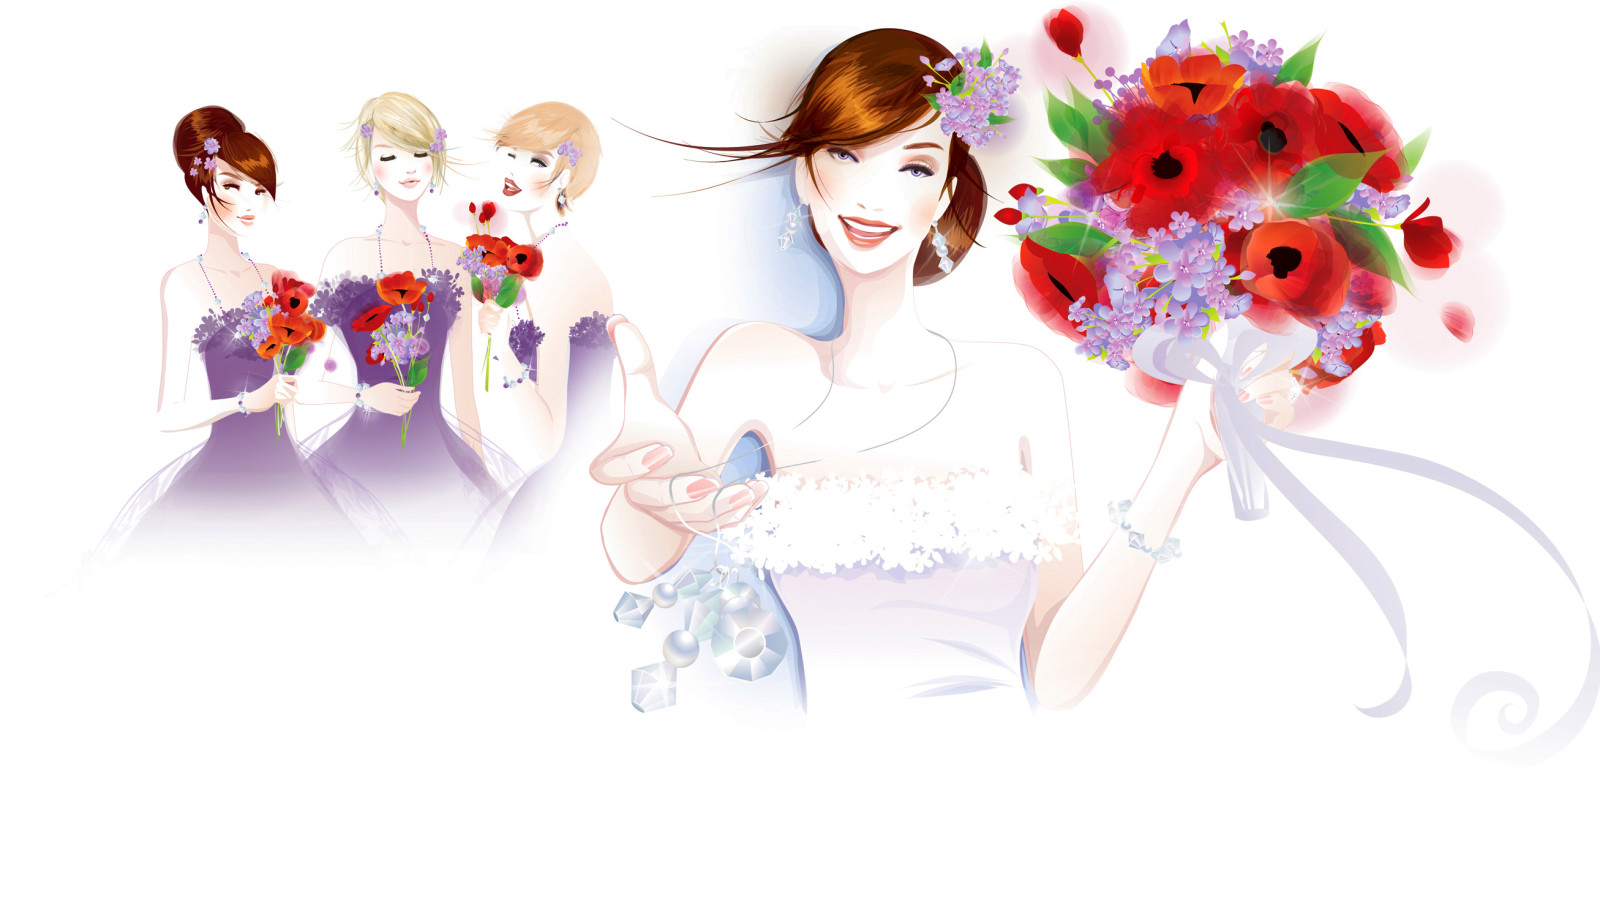 dekorasi, tersenyum, bunga-bunga, mode, pengantin, karangan bunga, pacar perempuan, gaun